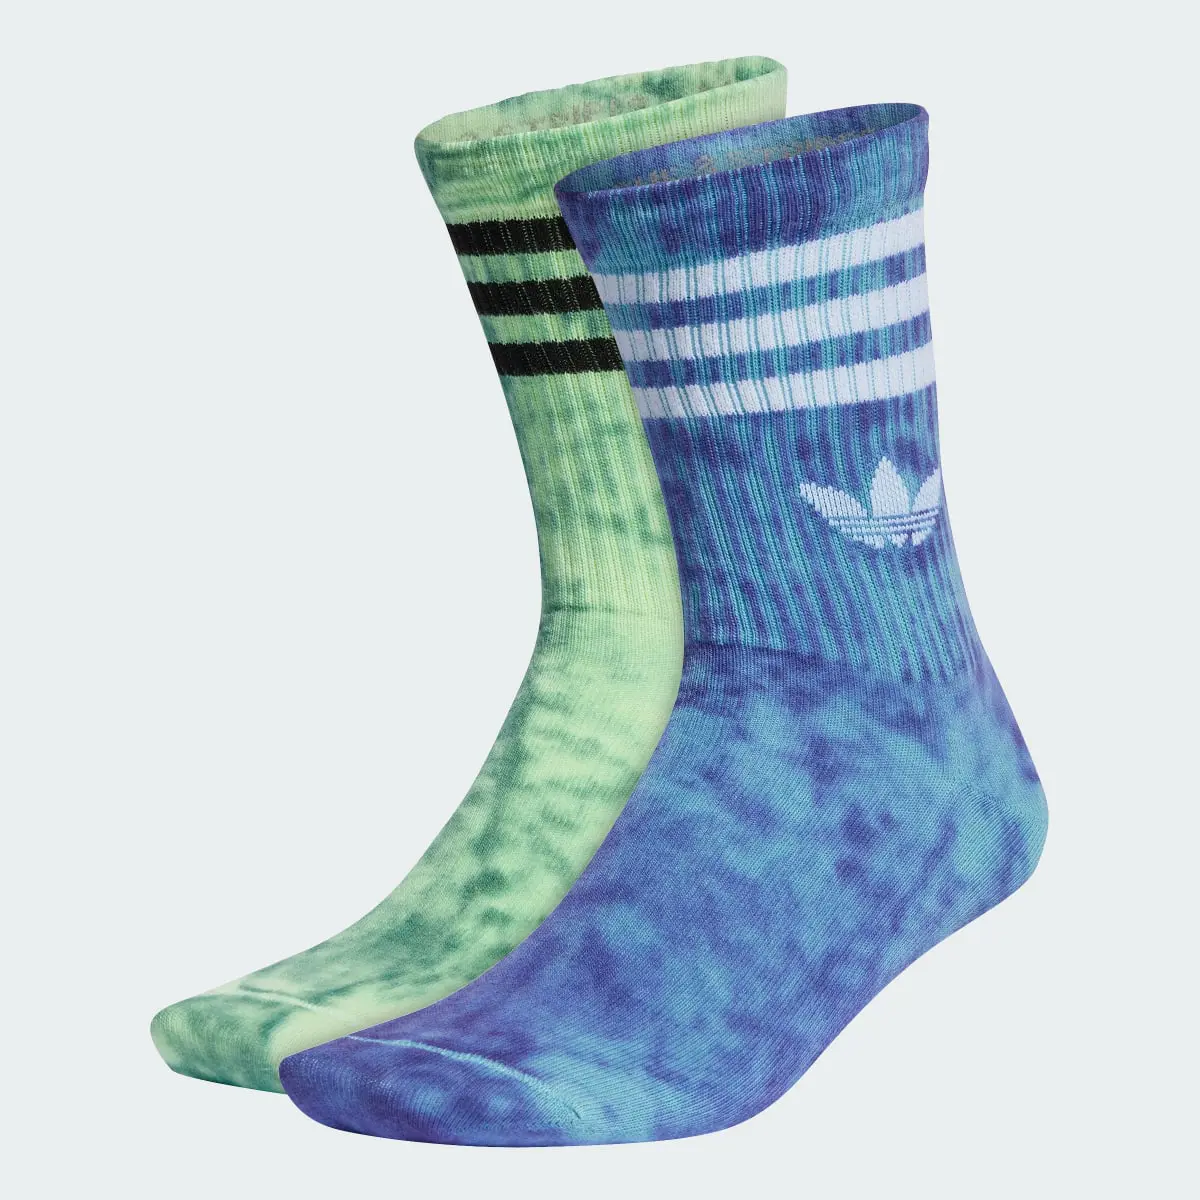 Adidas Tie Dye Socks 2 Pairs. 2